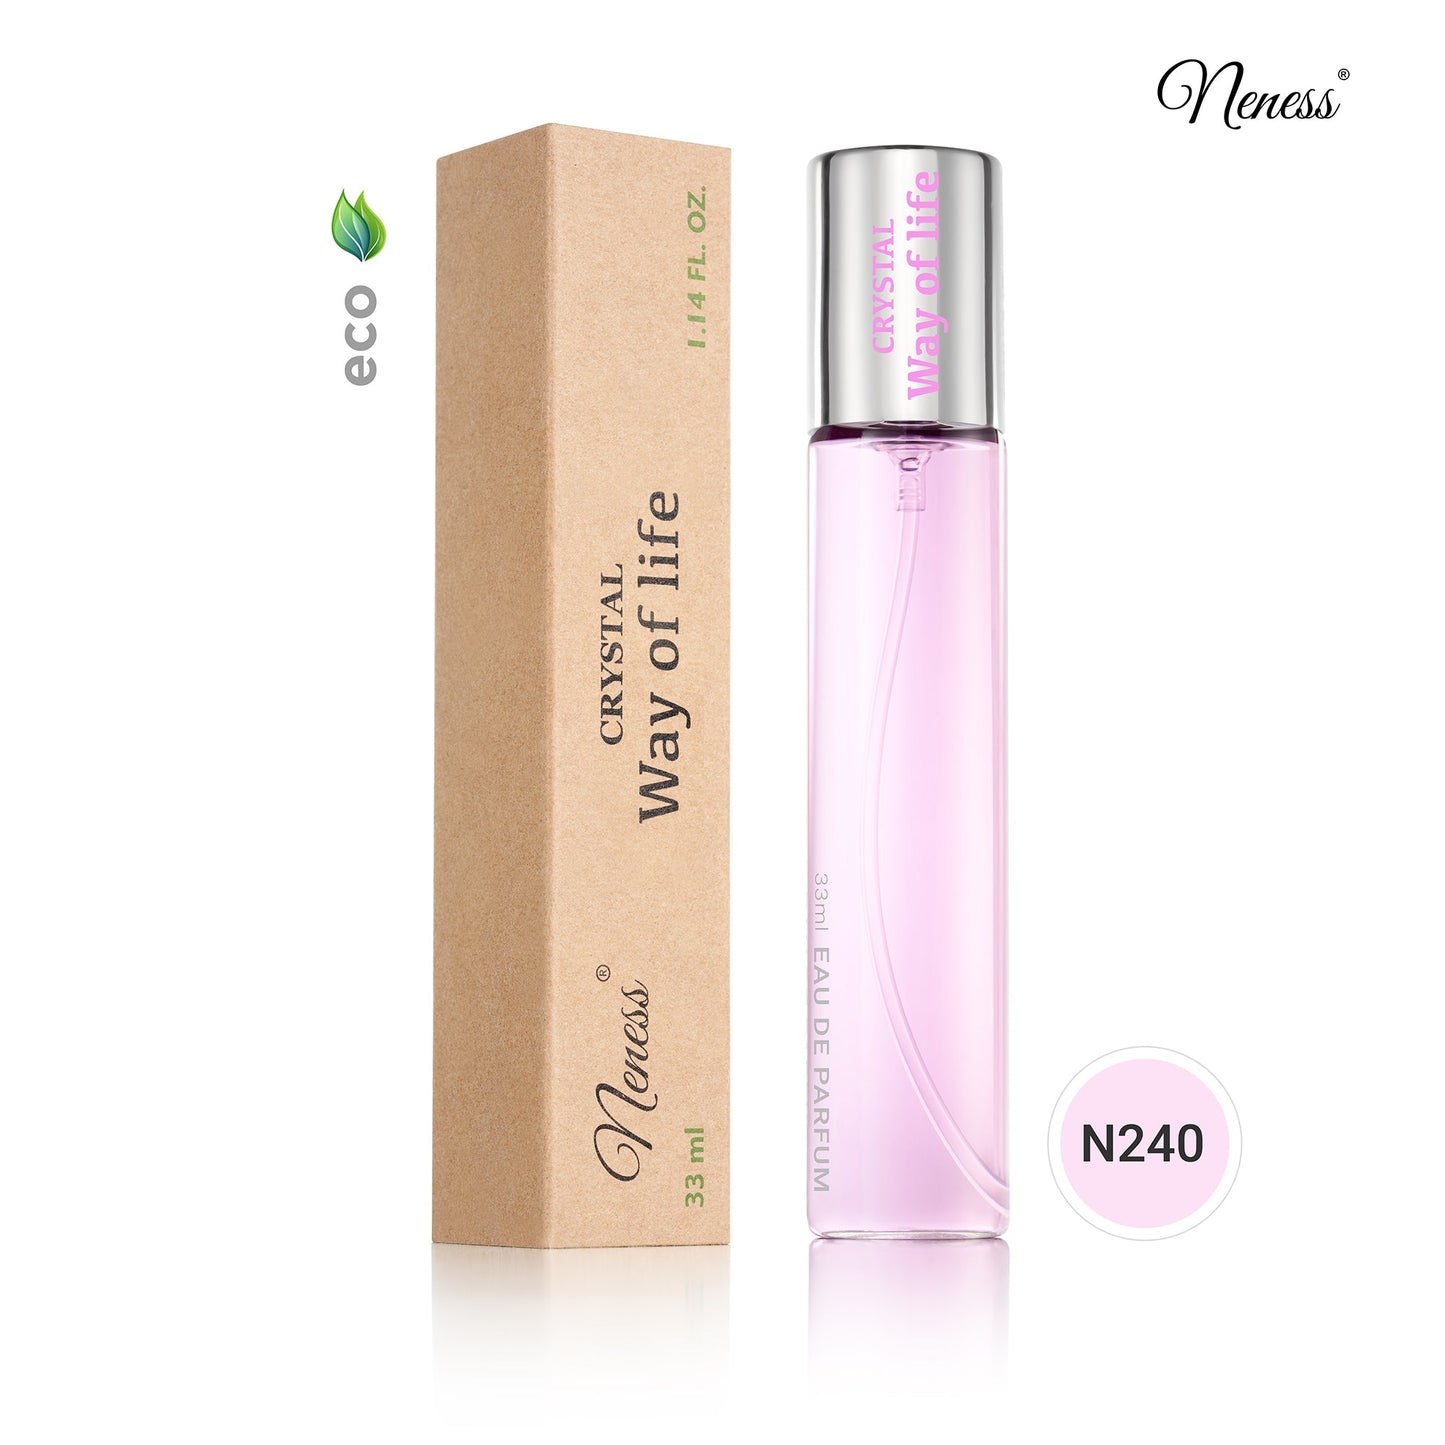 N240. Neness Crystal Way Of Life - 33 ml - Perfume For Women